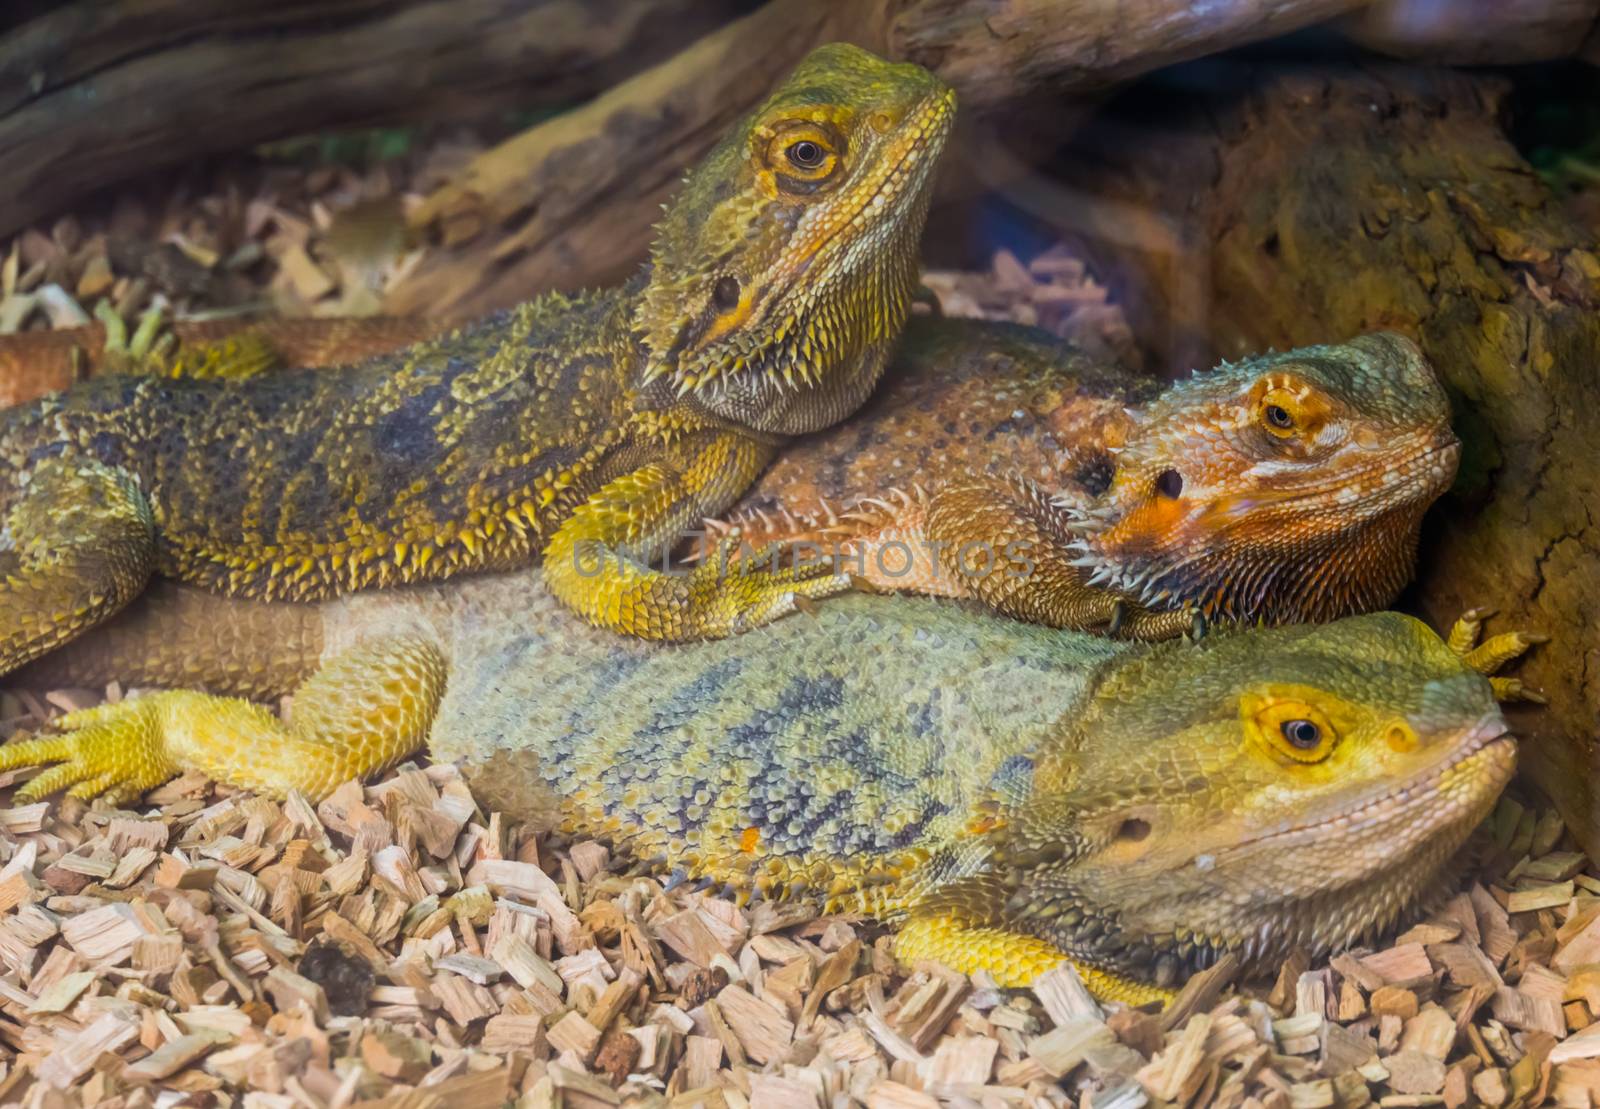 bearded dragon lizard family portrait, tropical reptile specie, popular terrarium pet in herpetoculture